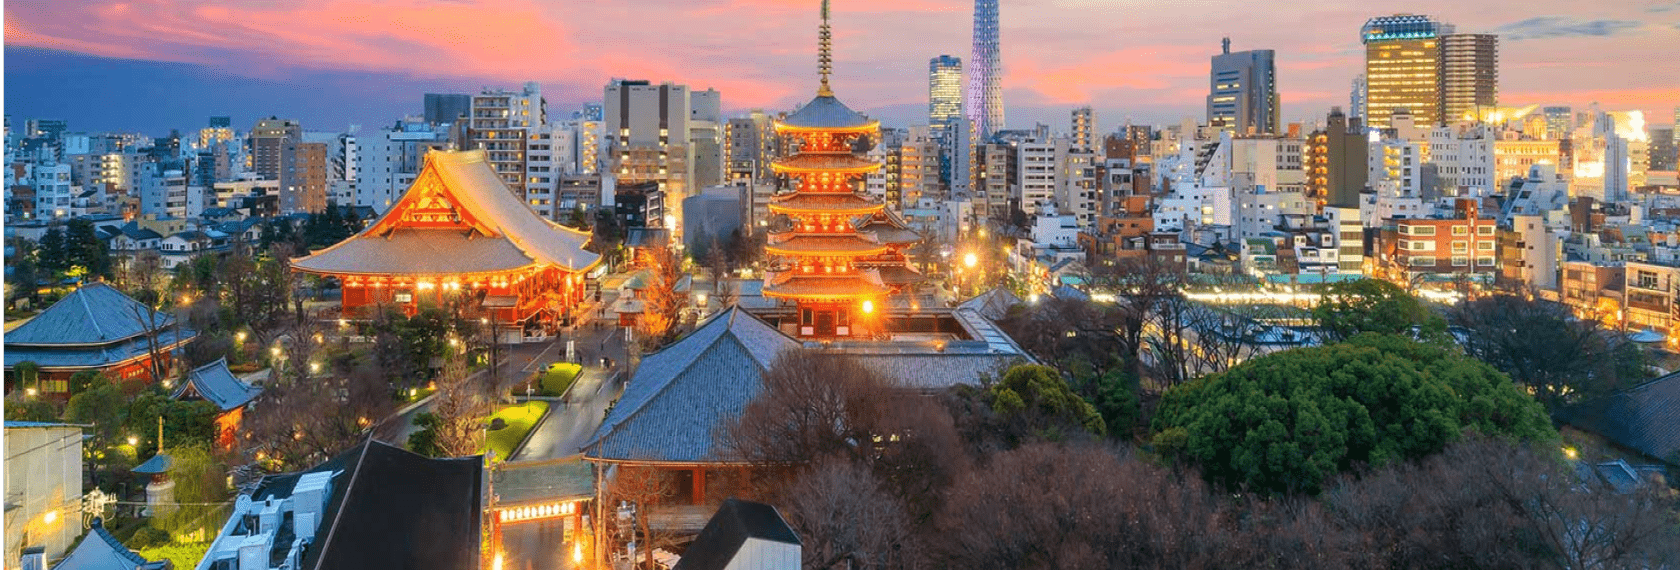 Japan city skyline